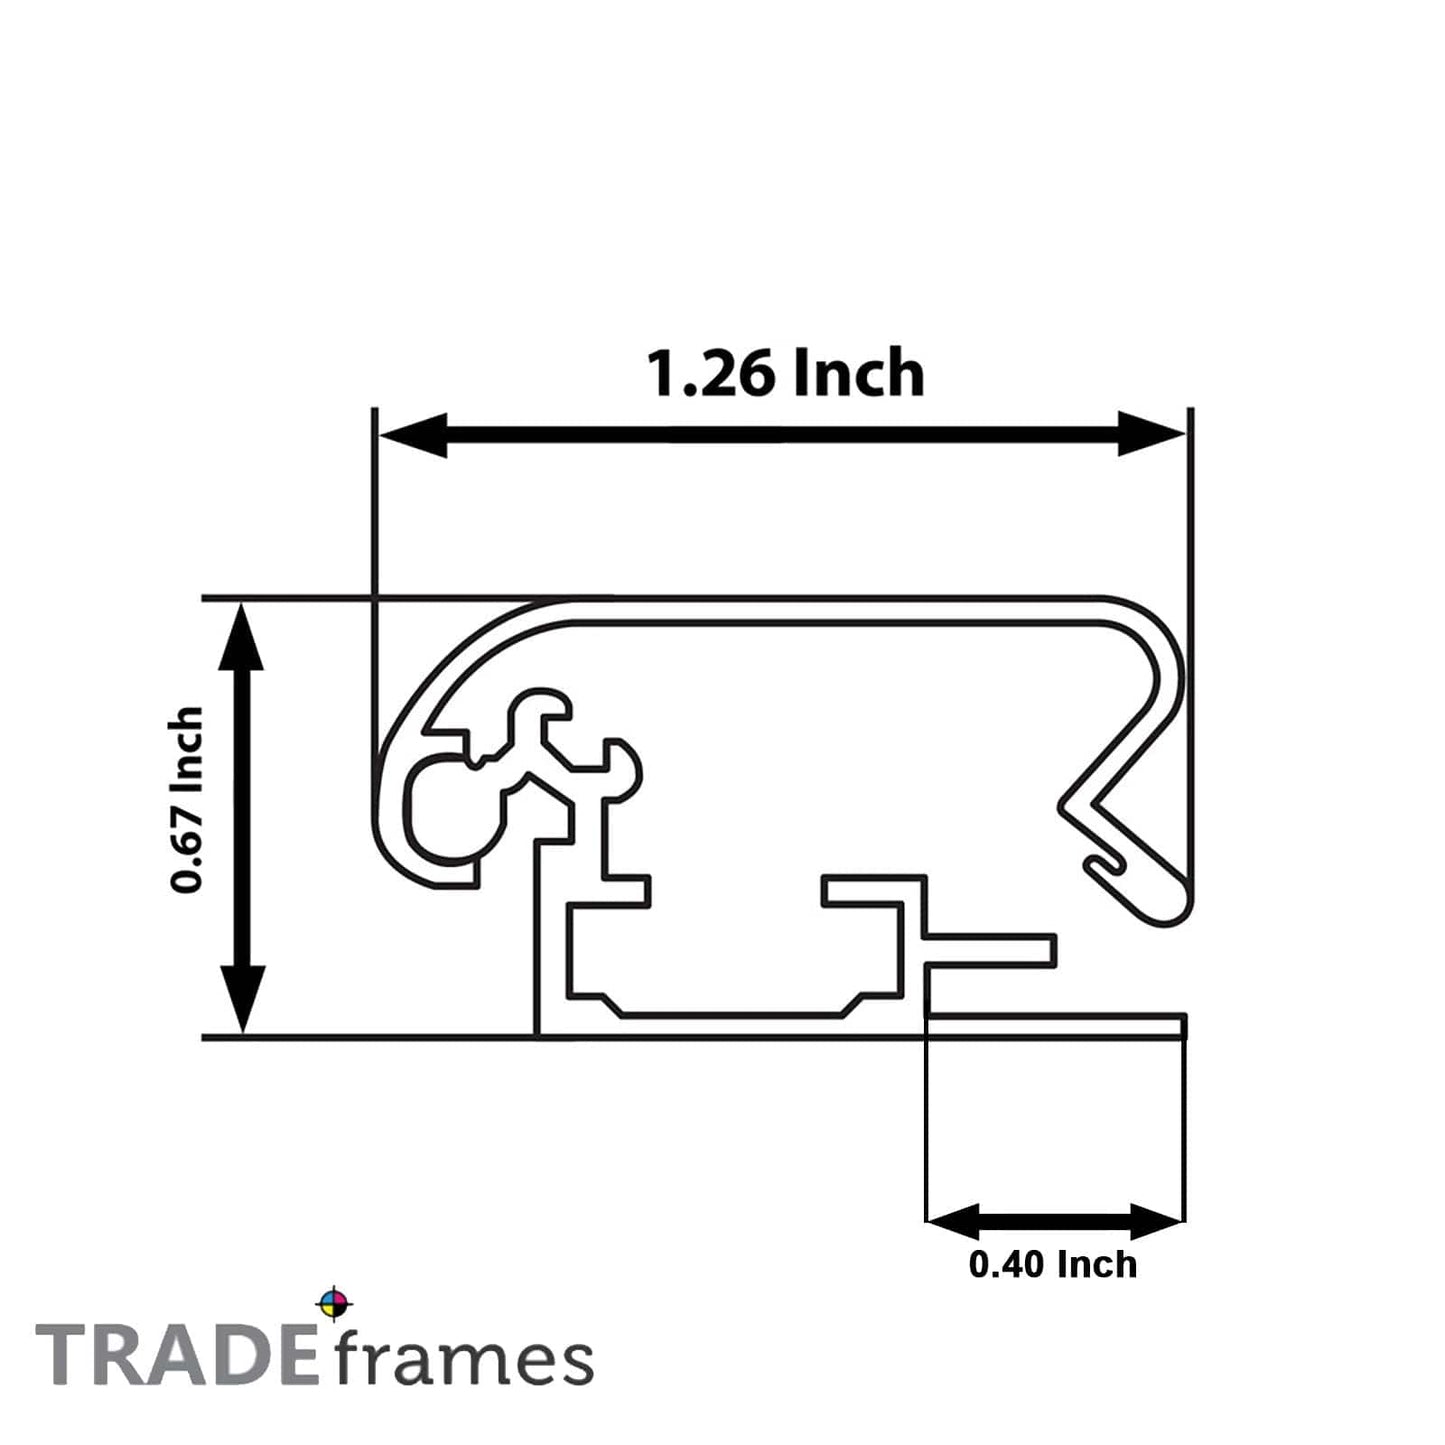 16x20  TRADEframe Gold Snap Frame 16x20 - 1.25 inch profile - Snap Frames Direct